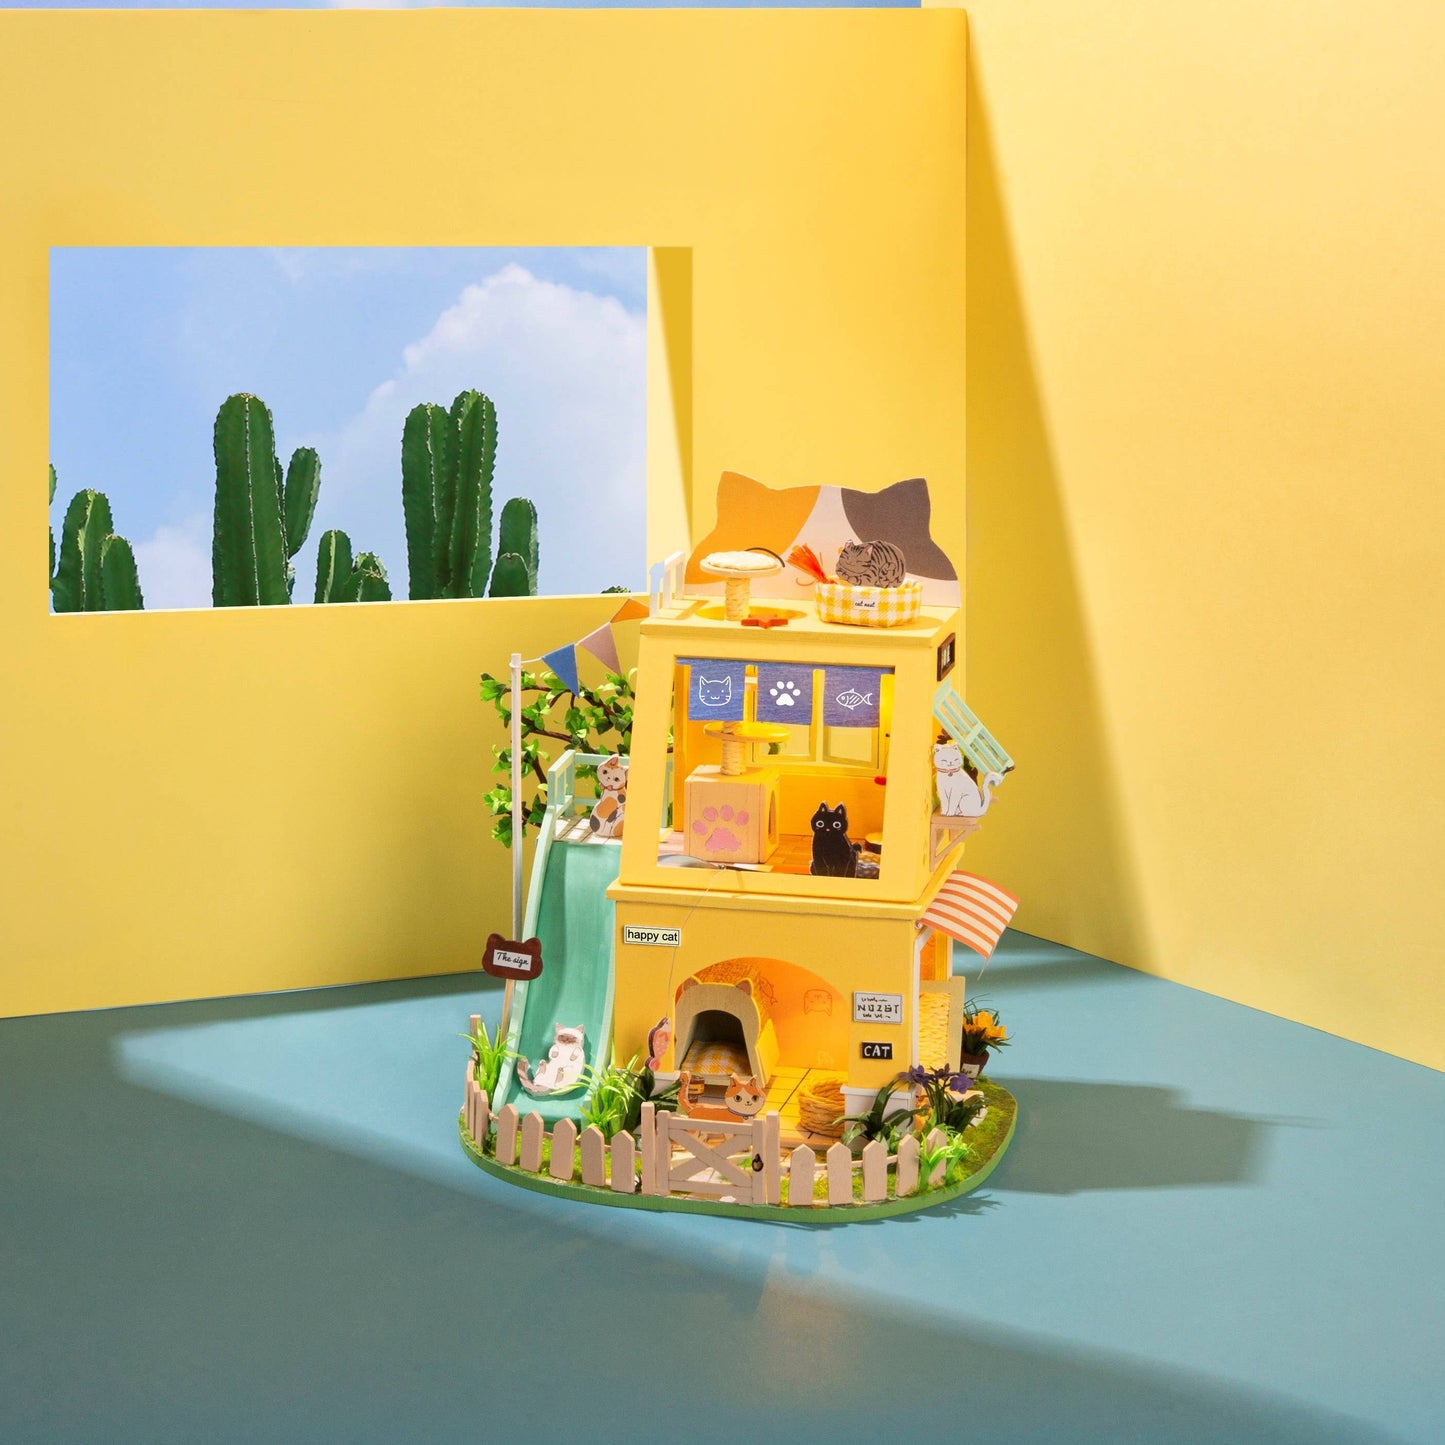 DIY Miniature Model Kit: Cat House